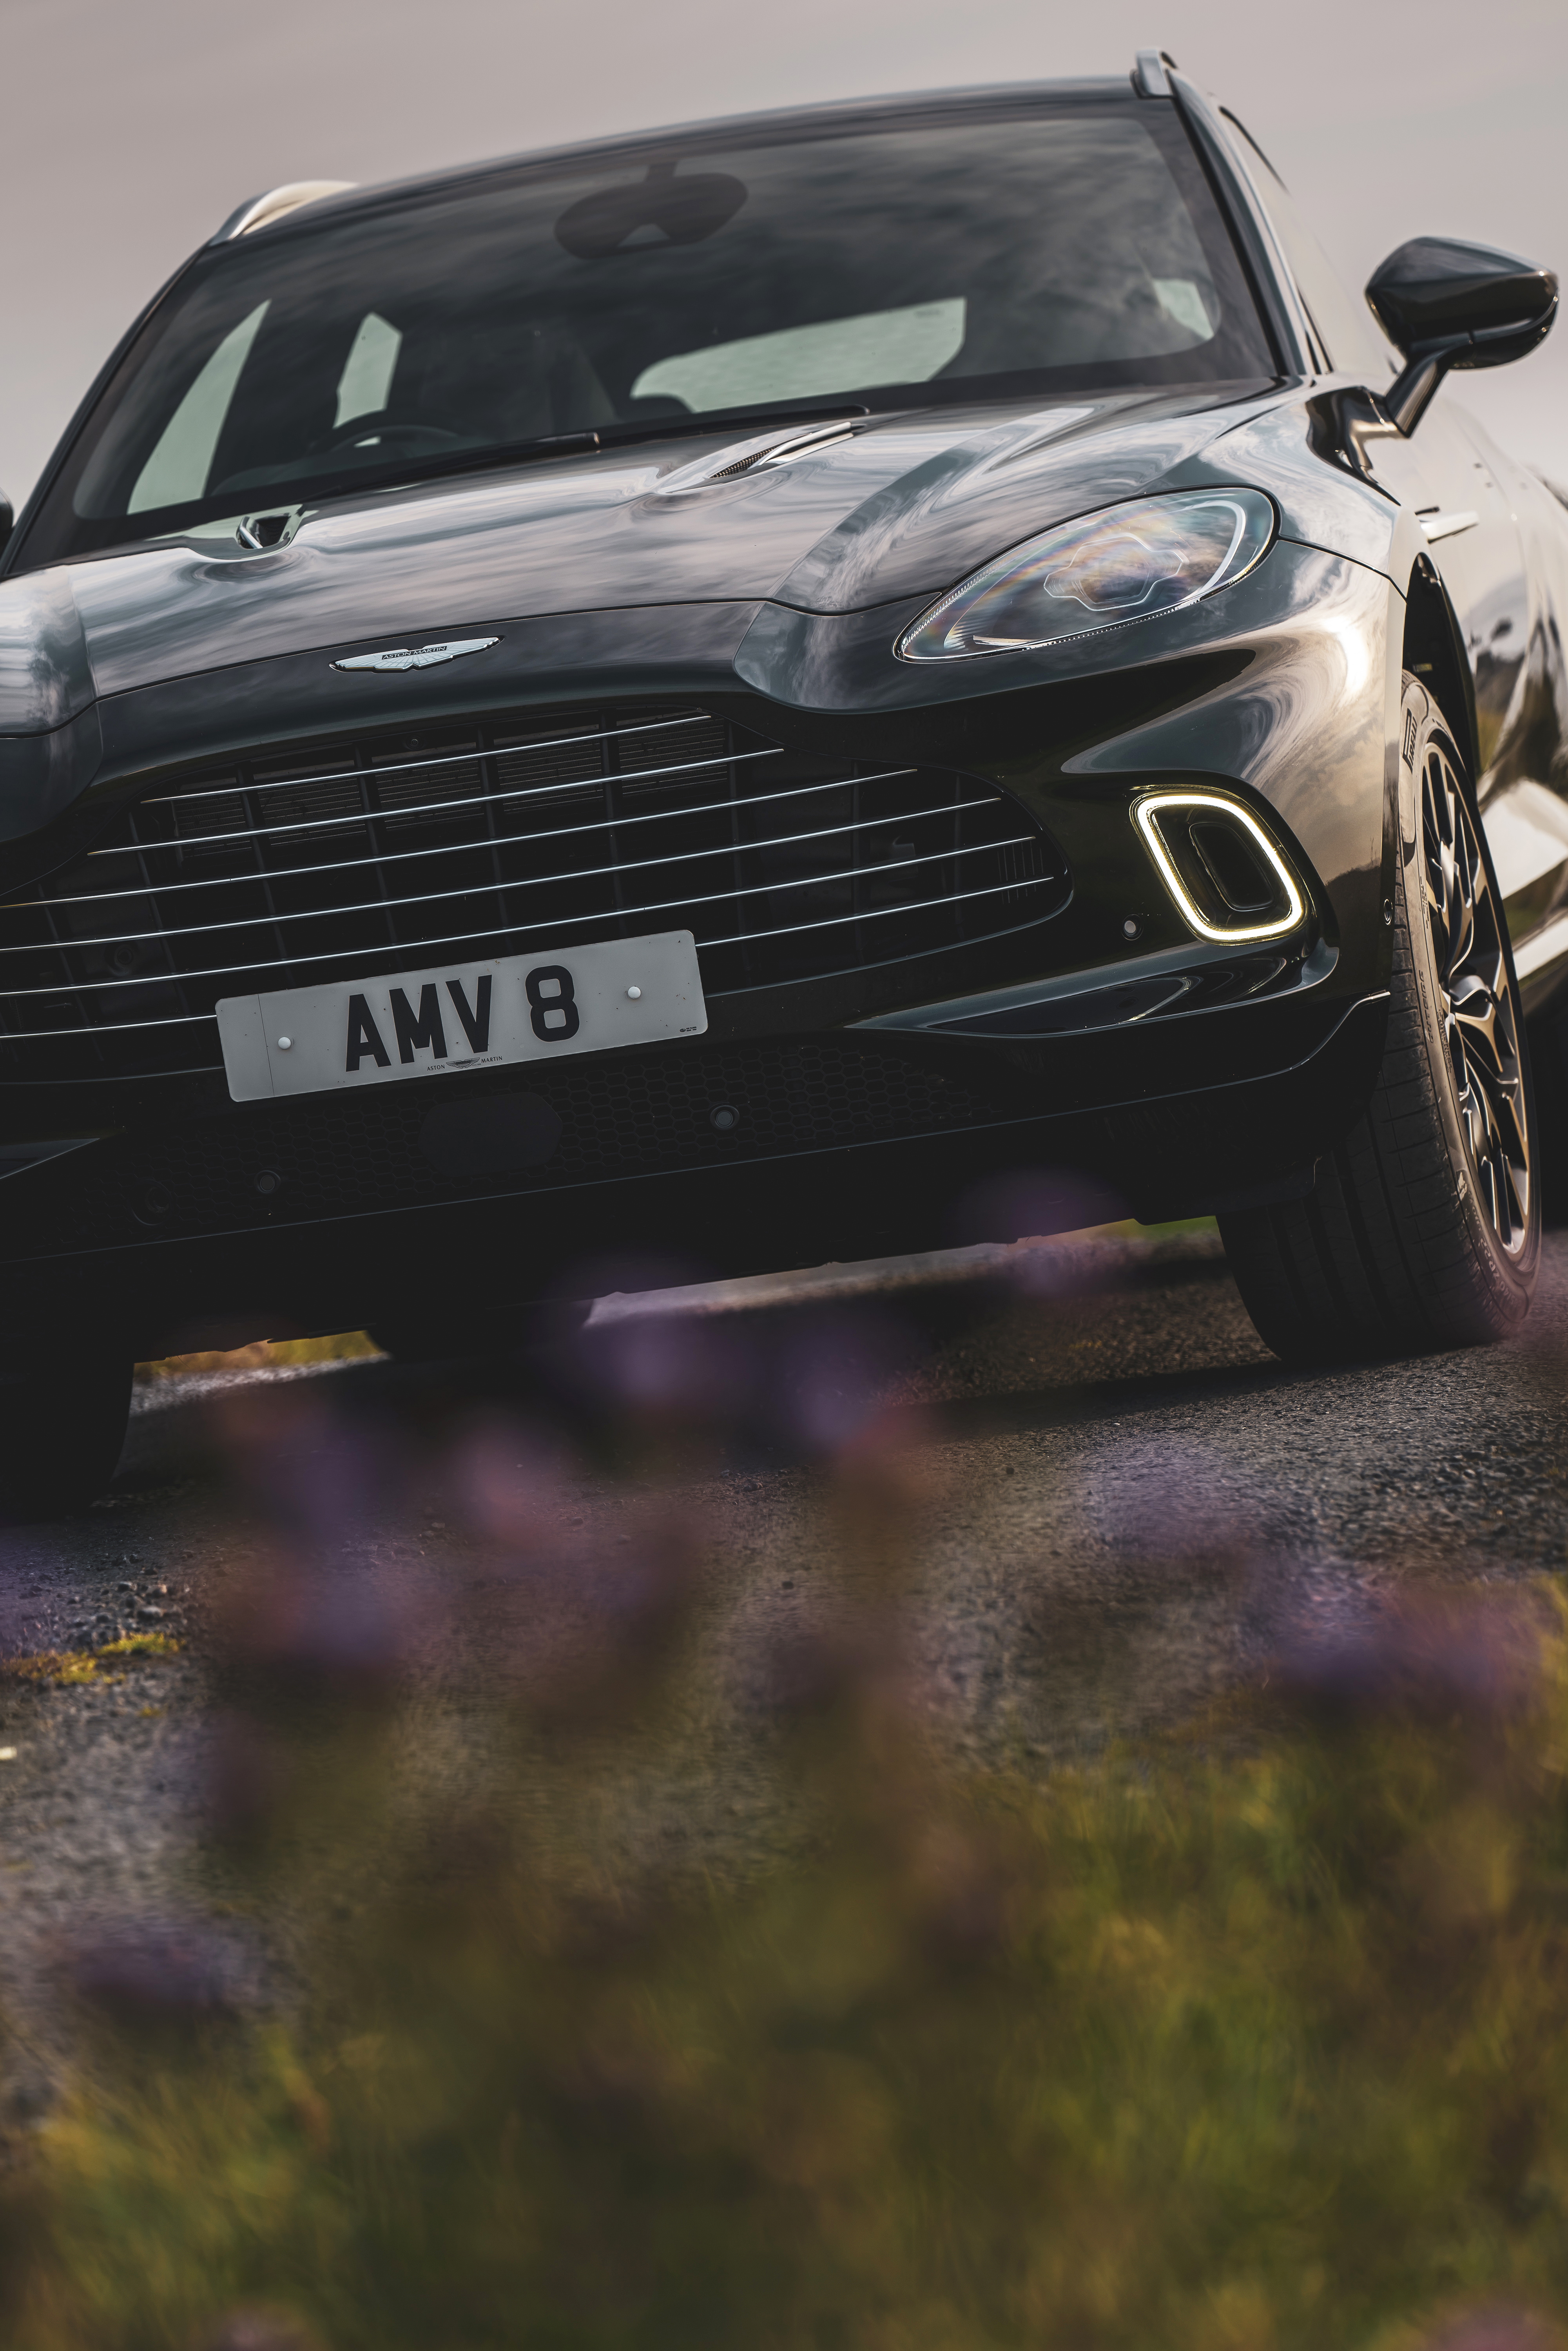 Tour de force: An exhilarating test drive of the Aston Martin DBX